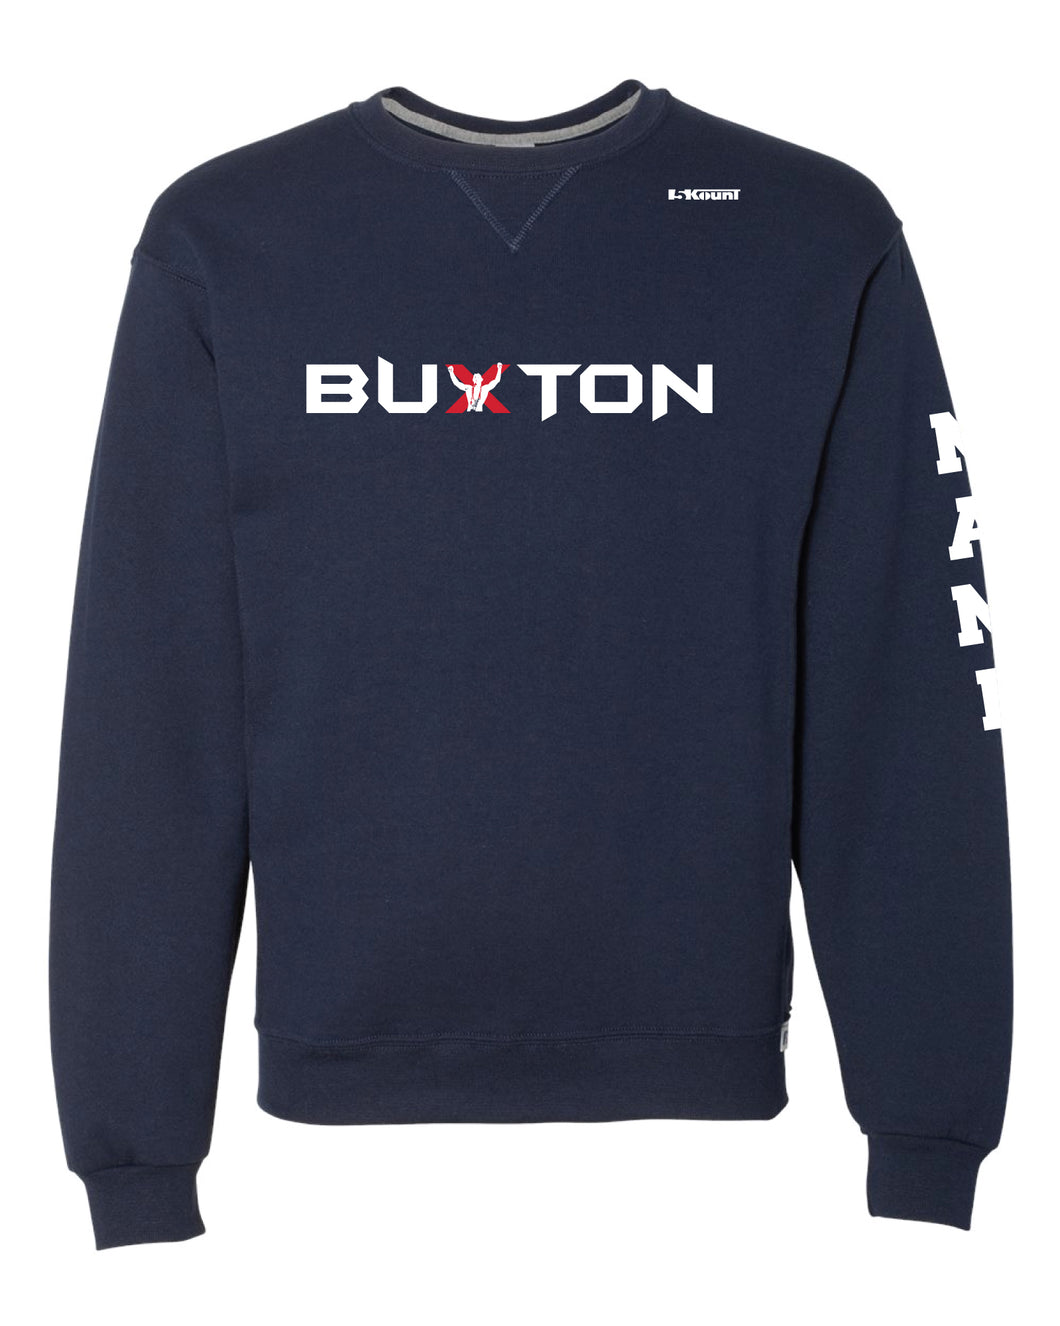 Buxton Russell Athletic Cotton Crewneck Sweatshirt - Navy - 5KounT2018